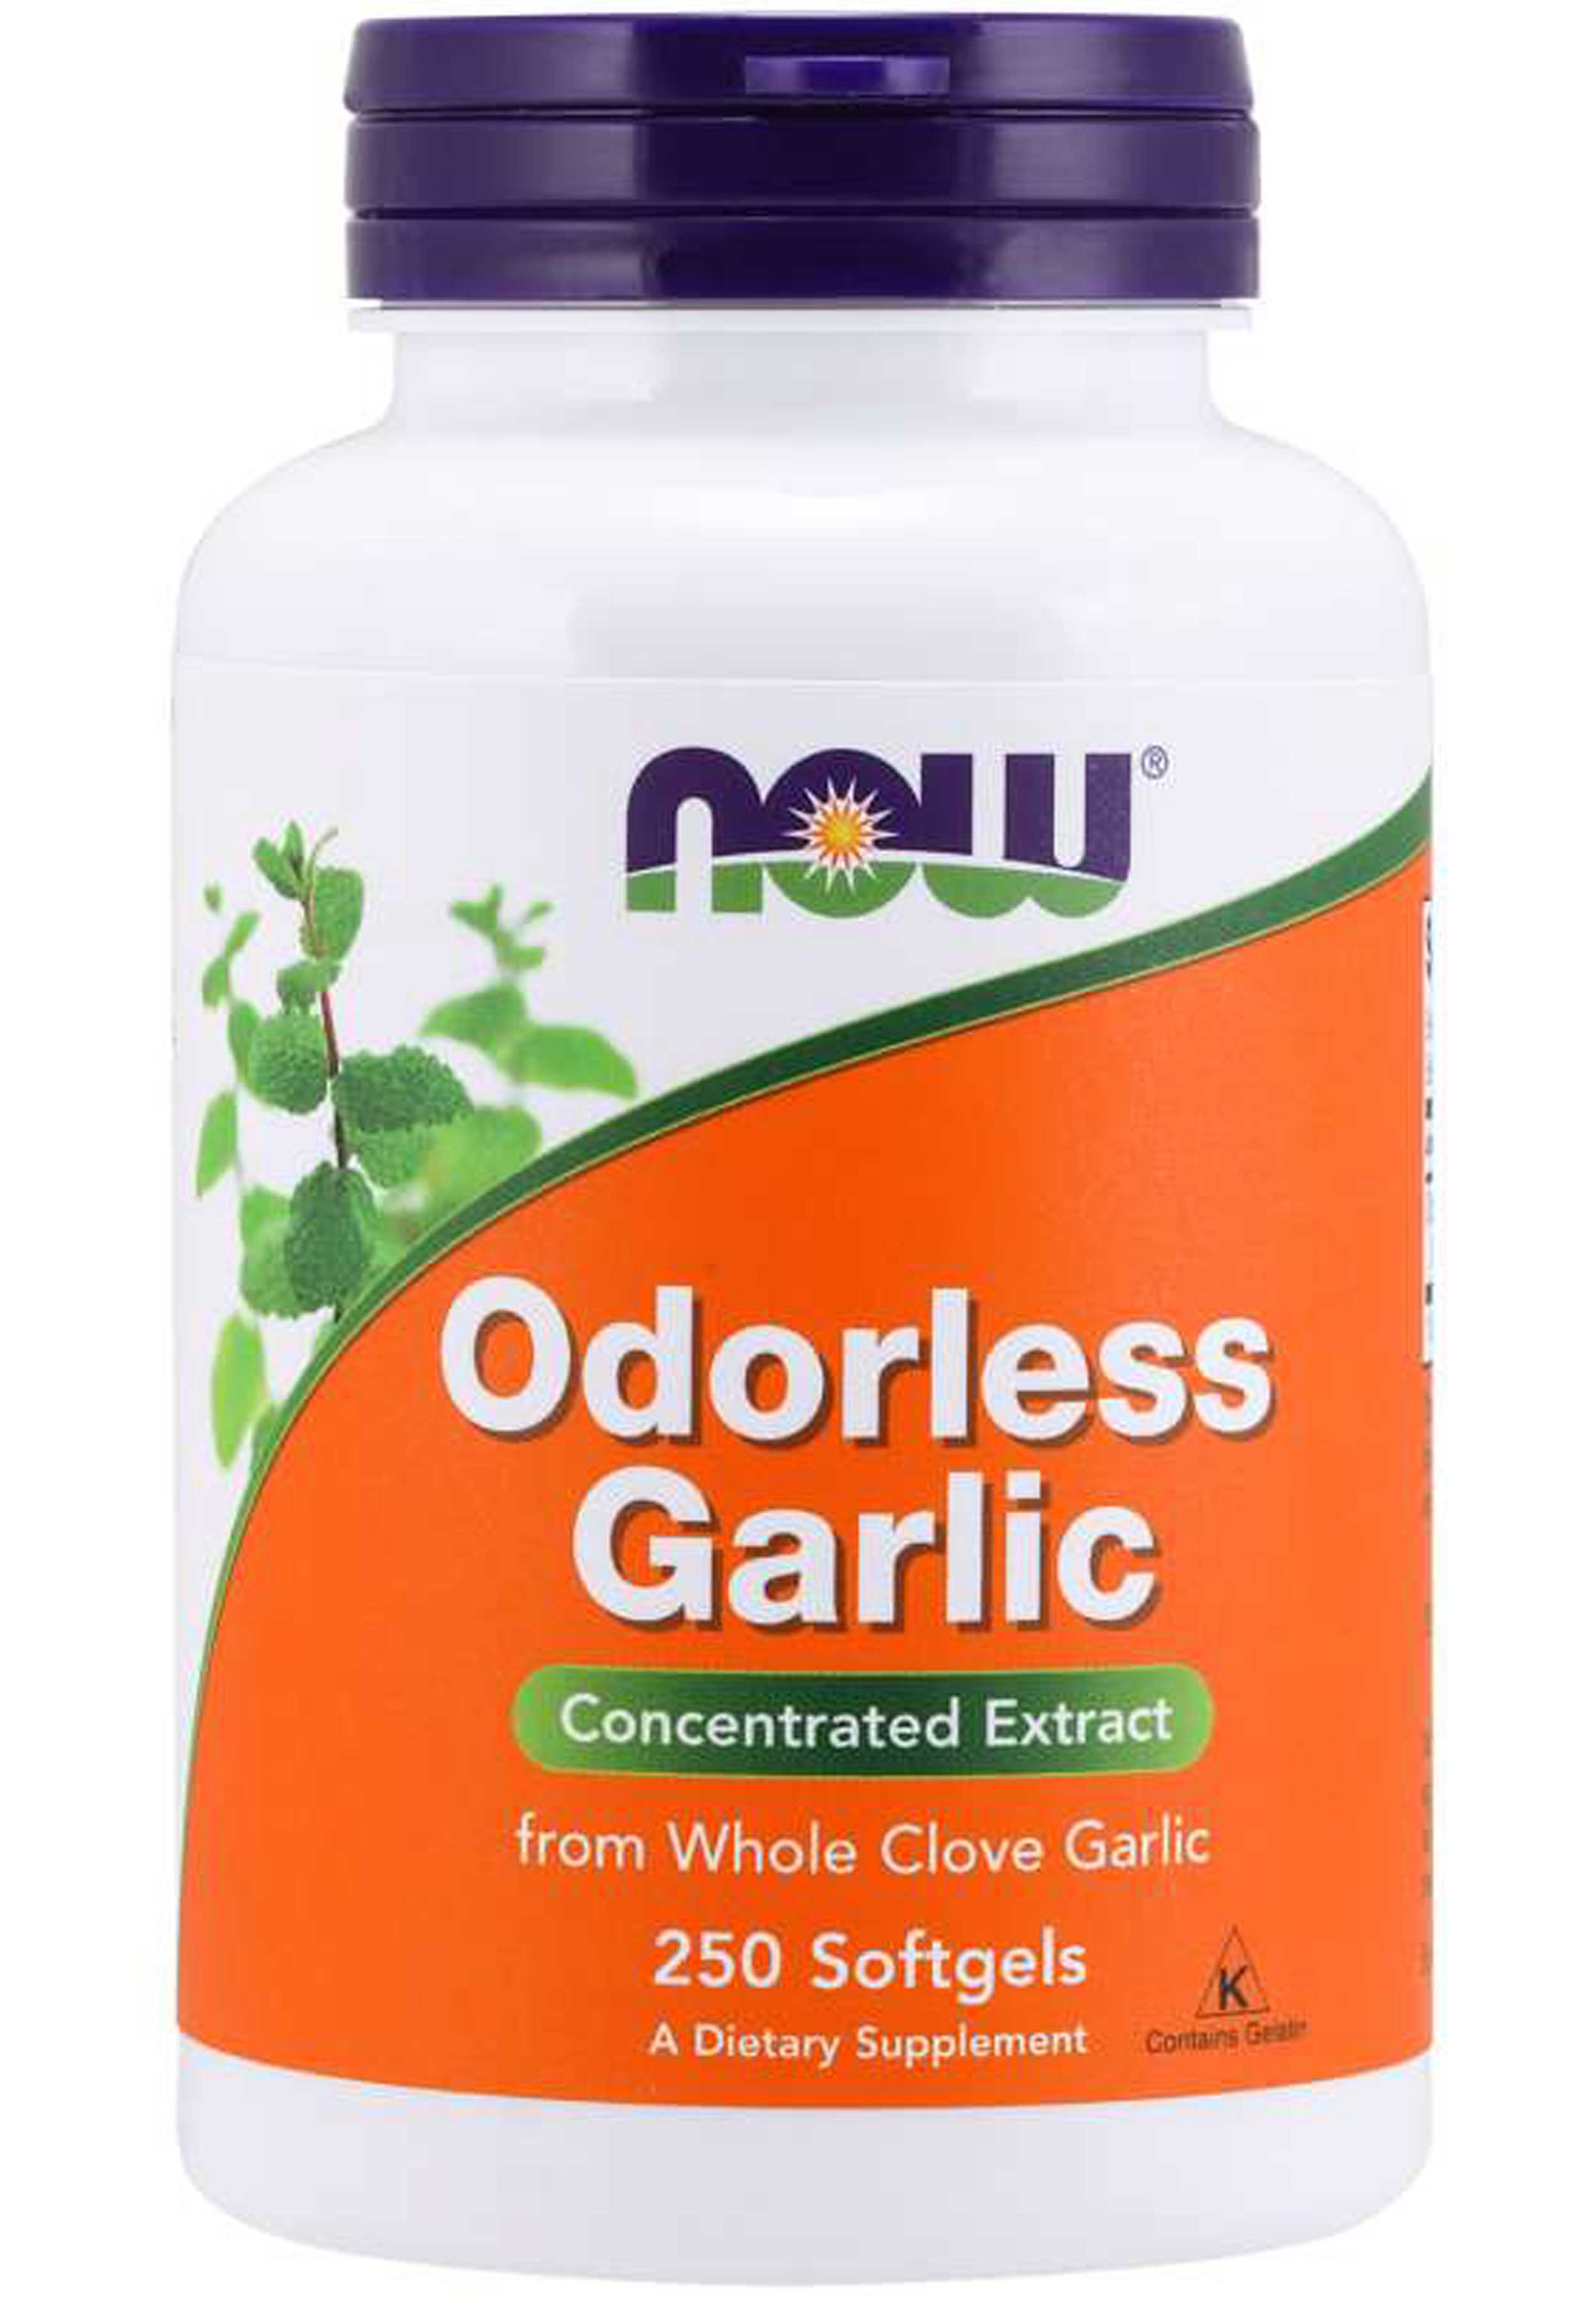 NOW Odorless Garlic